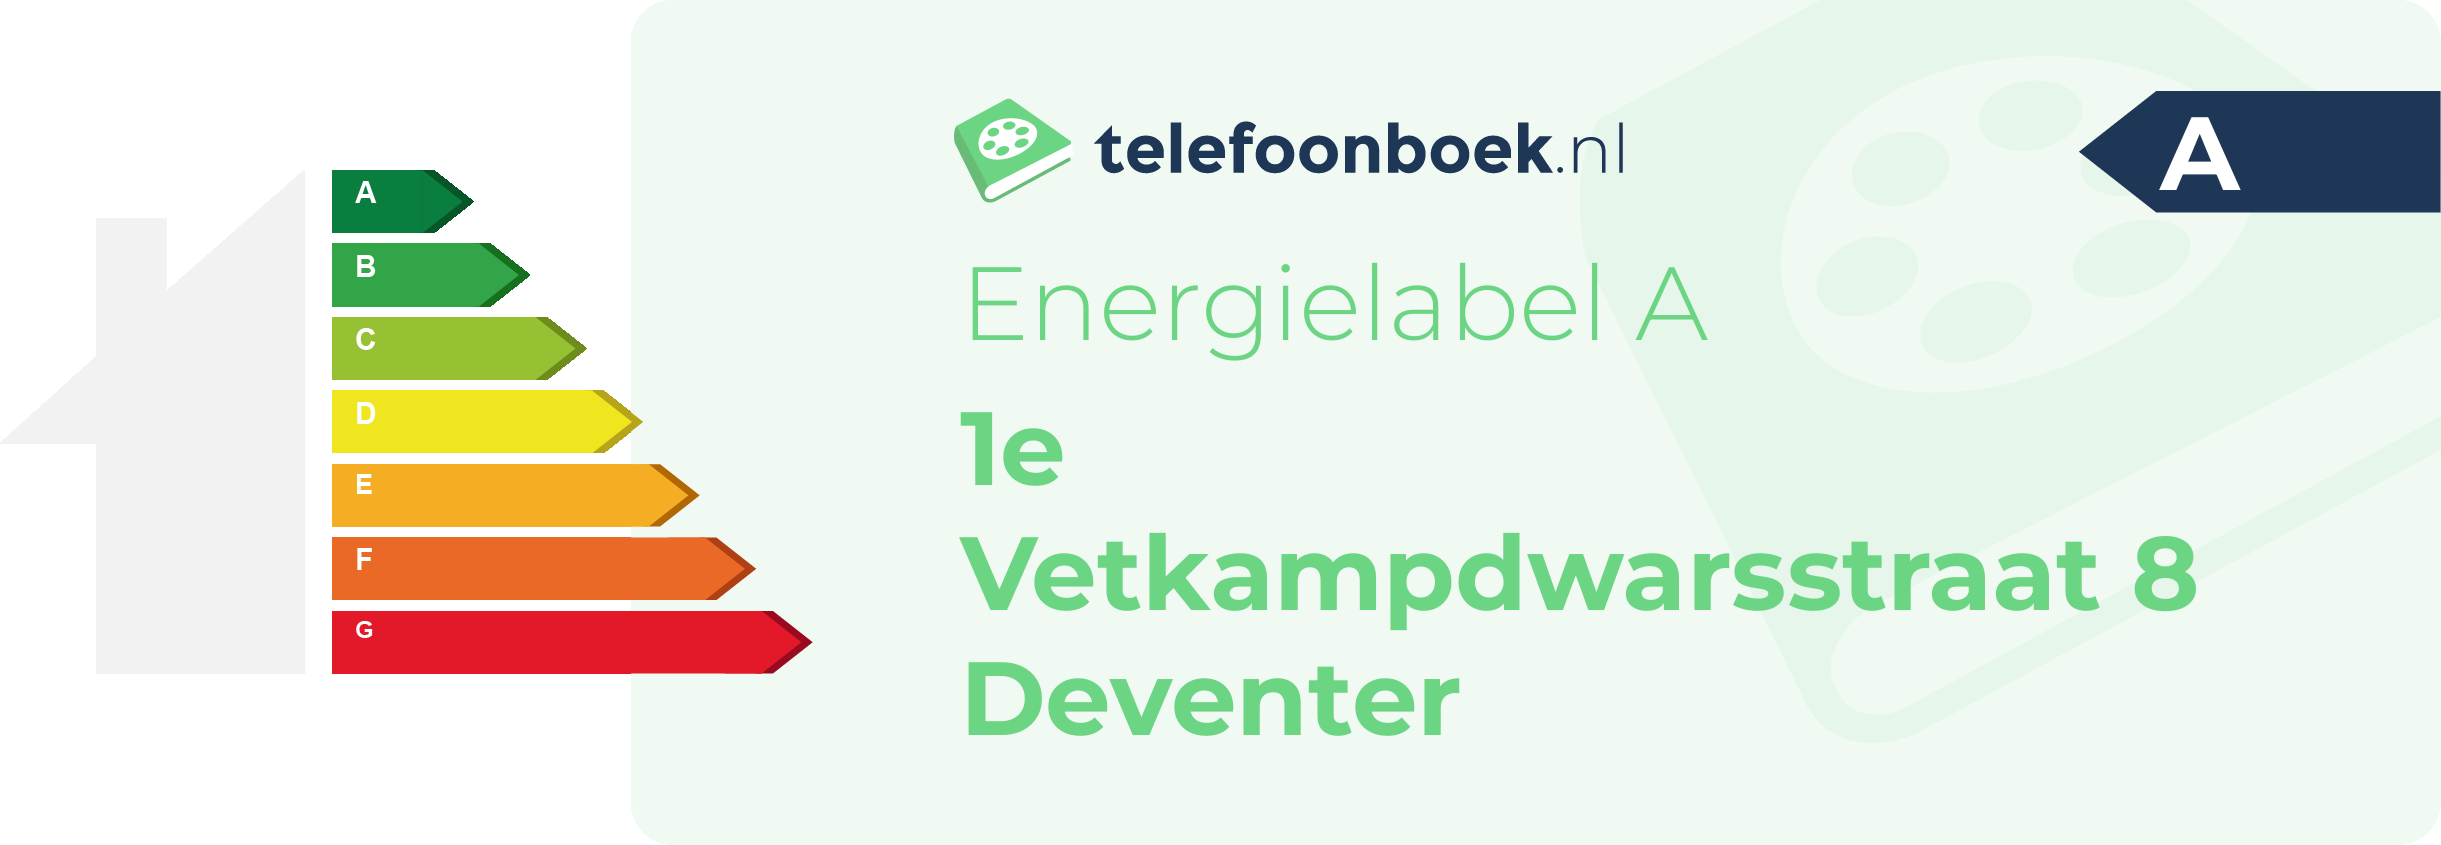 Energielabel 1e Vetkampdwarsstraat 8 Deventer